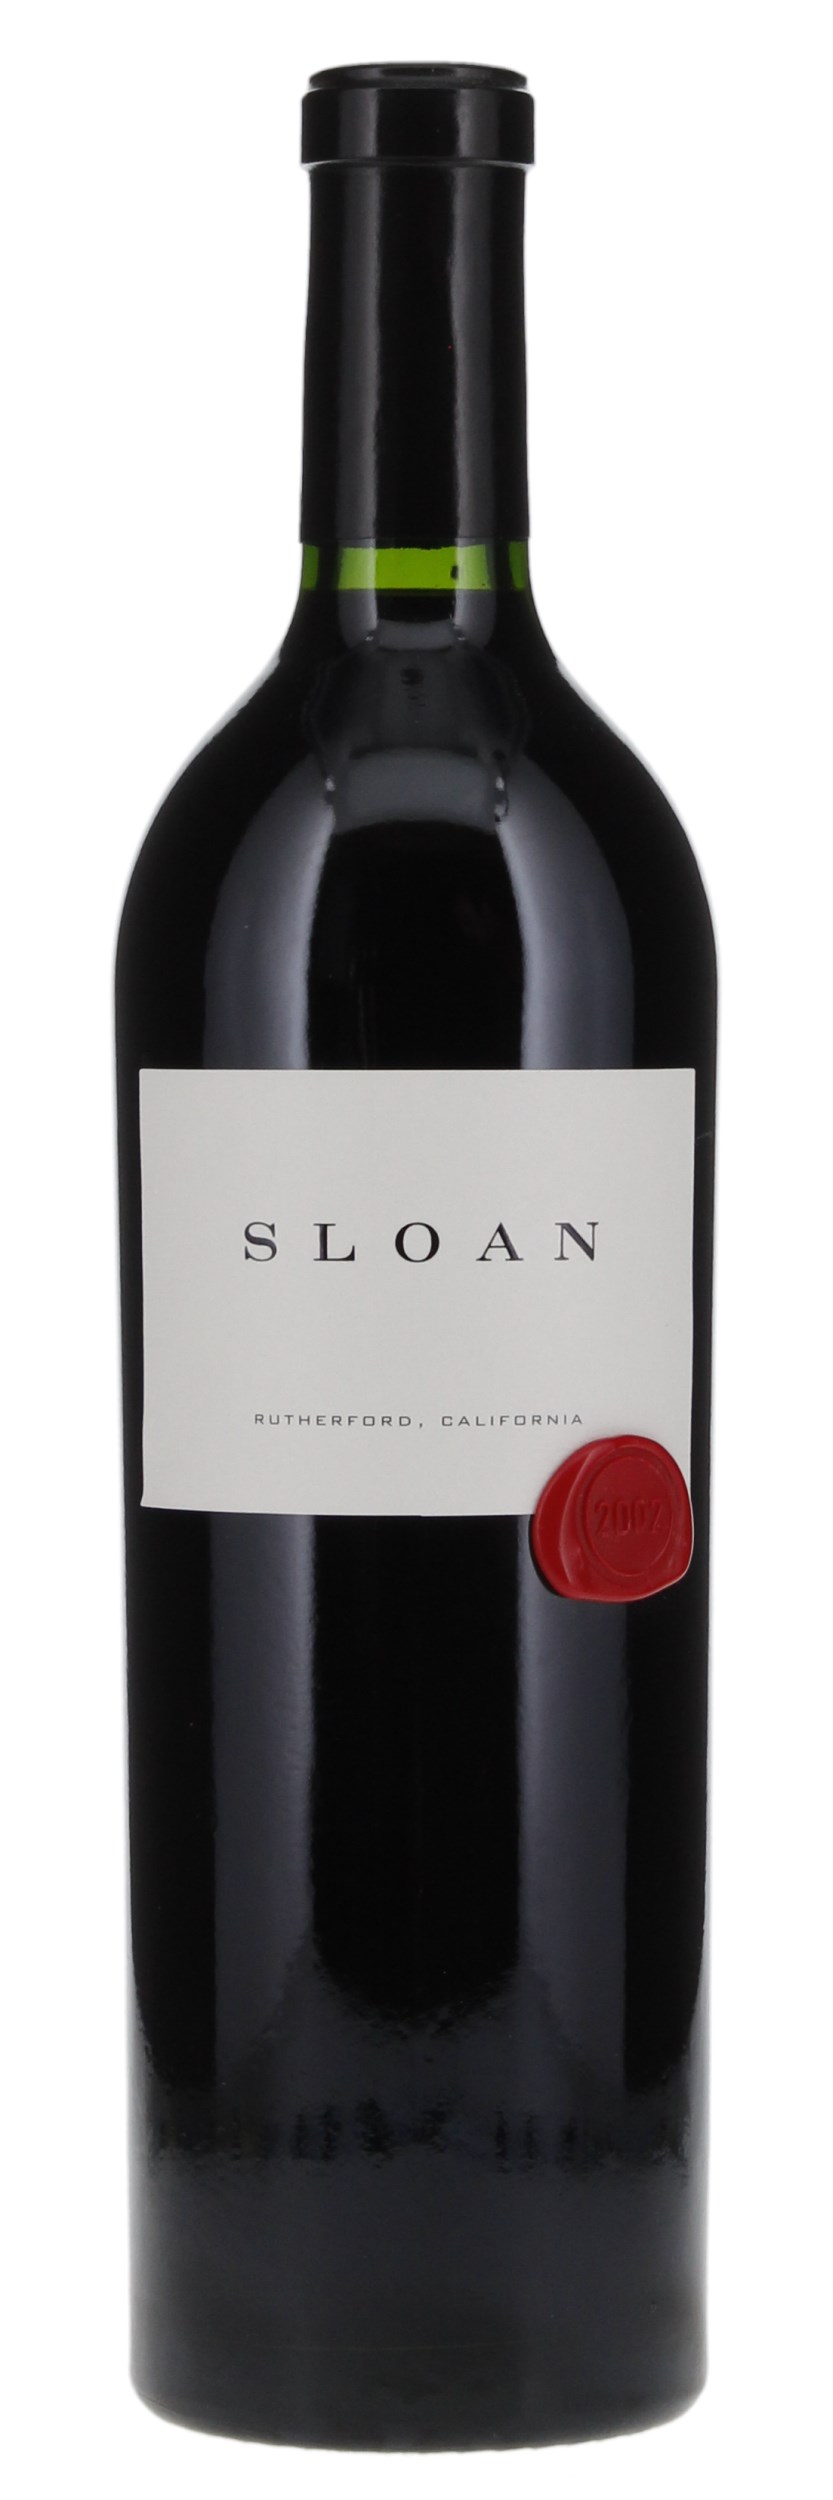 2002 Sloan Proprietary Red, 750ml